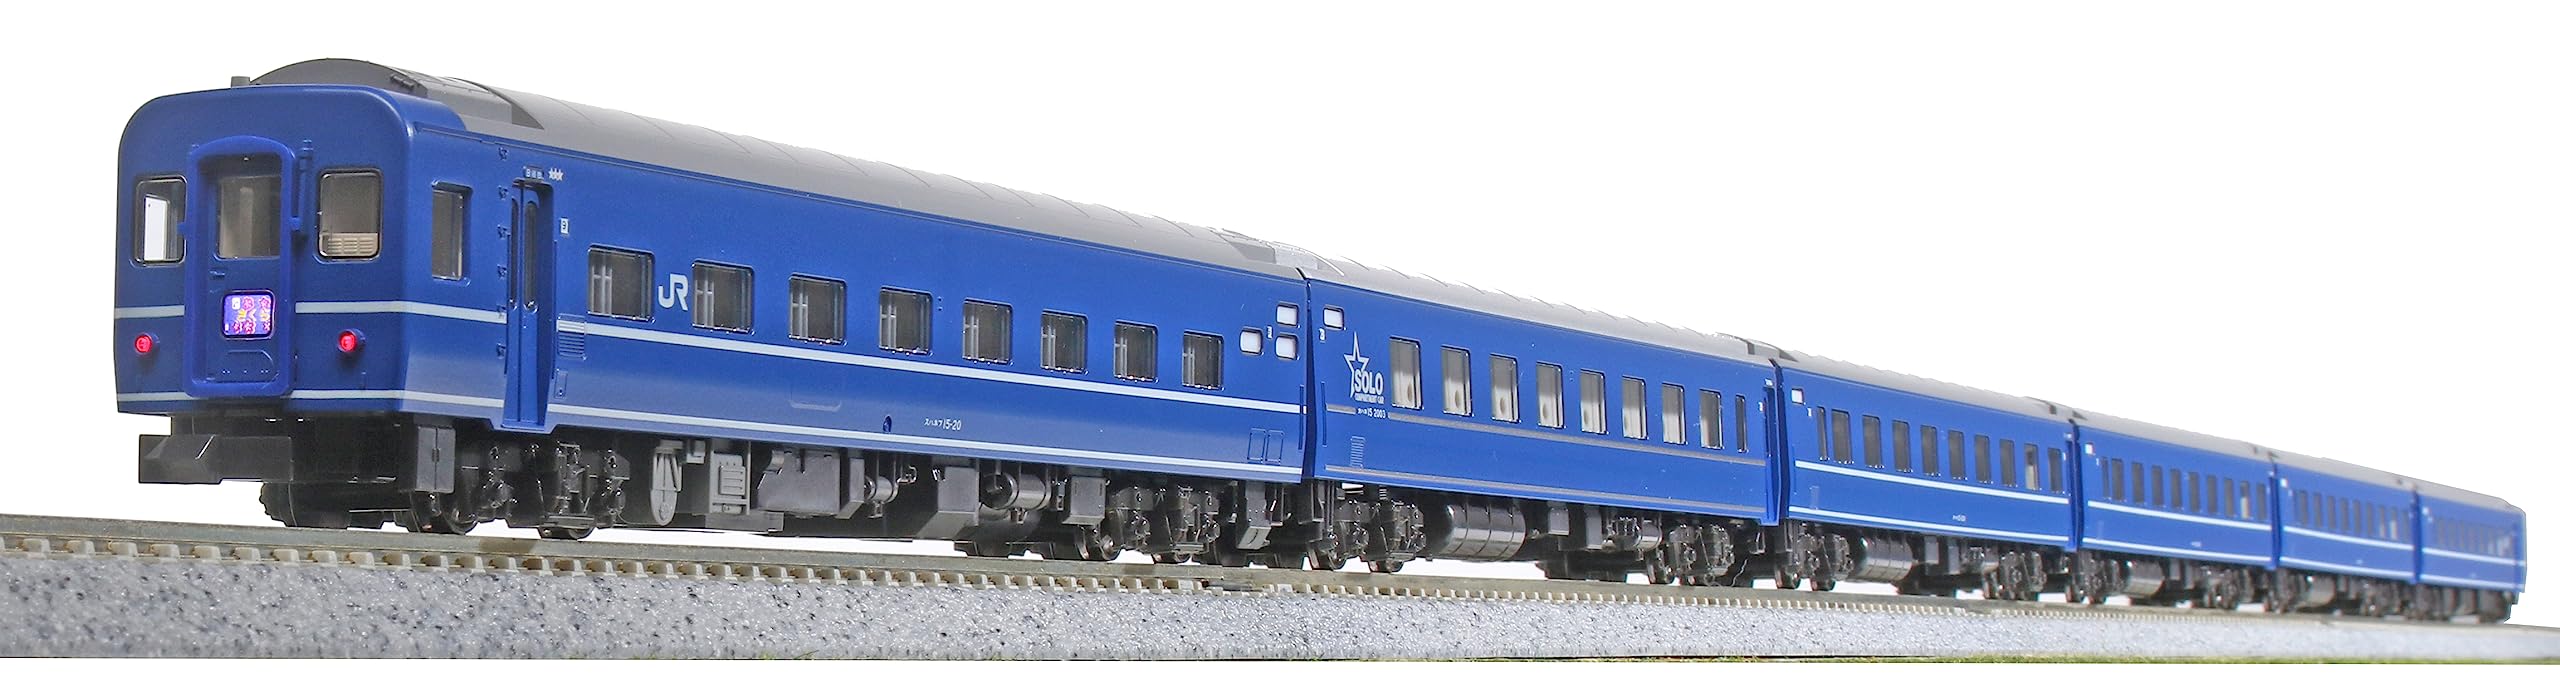 Kato Spur N 14-Serie 6-Wagen-Set Sakura Hayabusa Fuji Passagier-Eisenbahnmodell